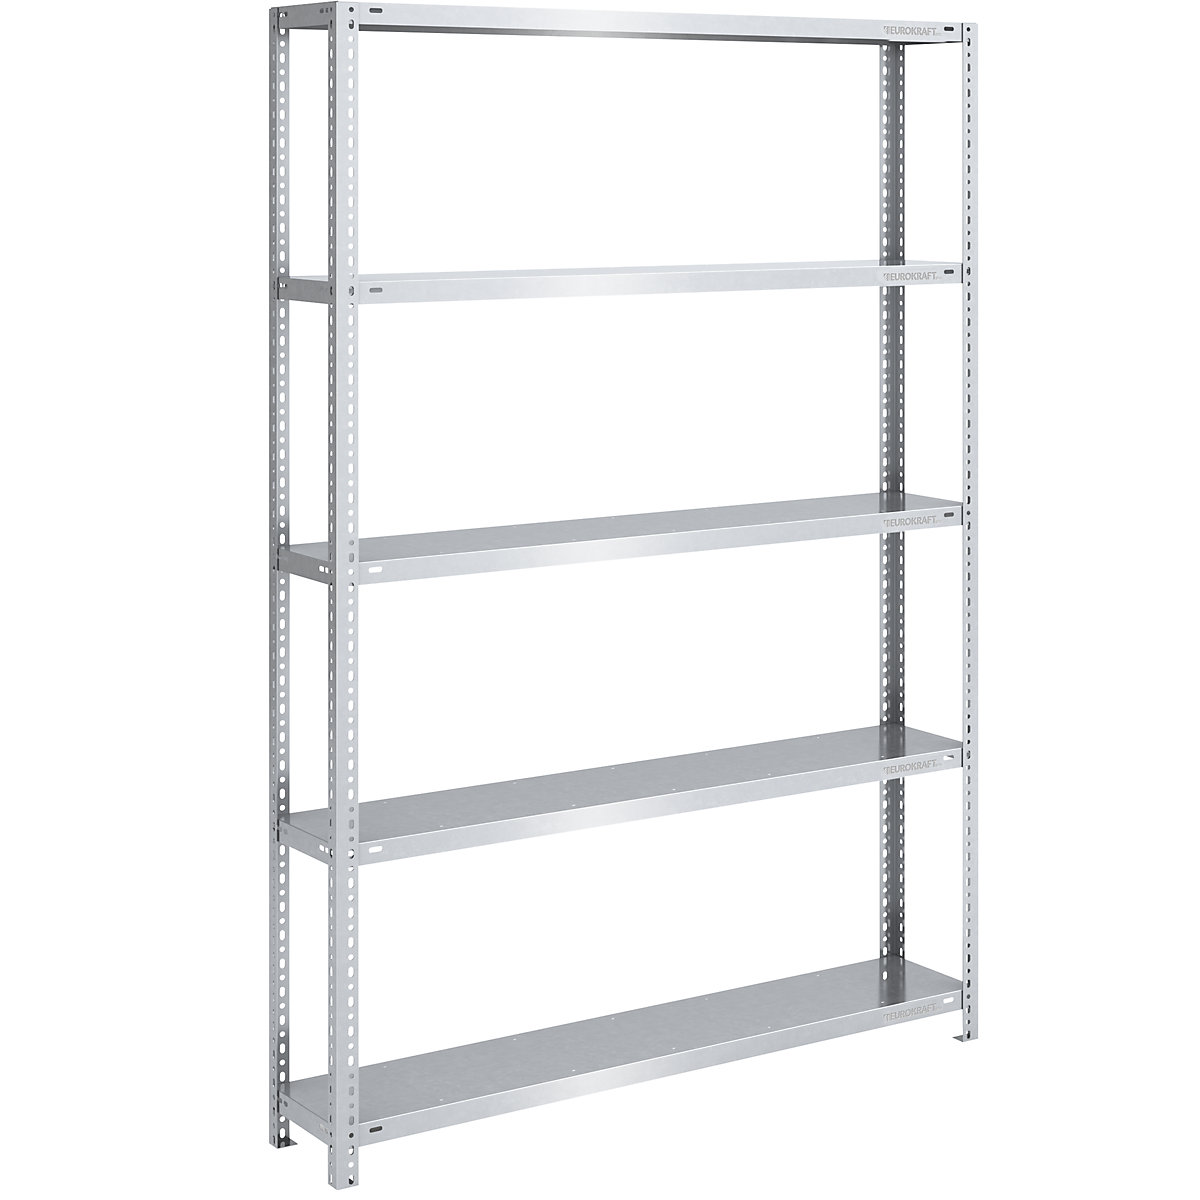 Bolt-together storage shelving, zinc plated, medium duty – eurokraft pro, shelf unit height 2000 mm, shelf width 1300 mm, depth 300 mm, standard shelf unit-8